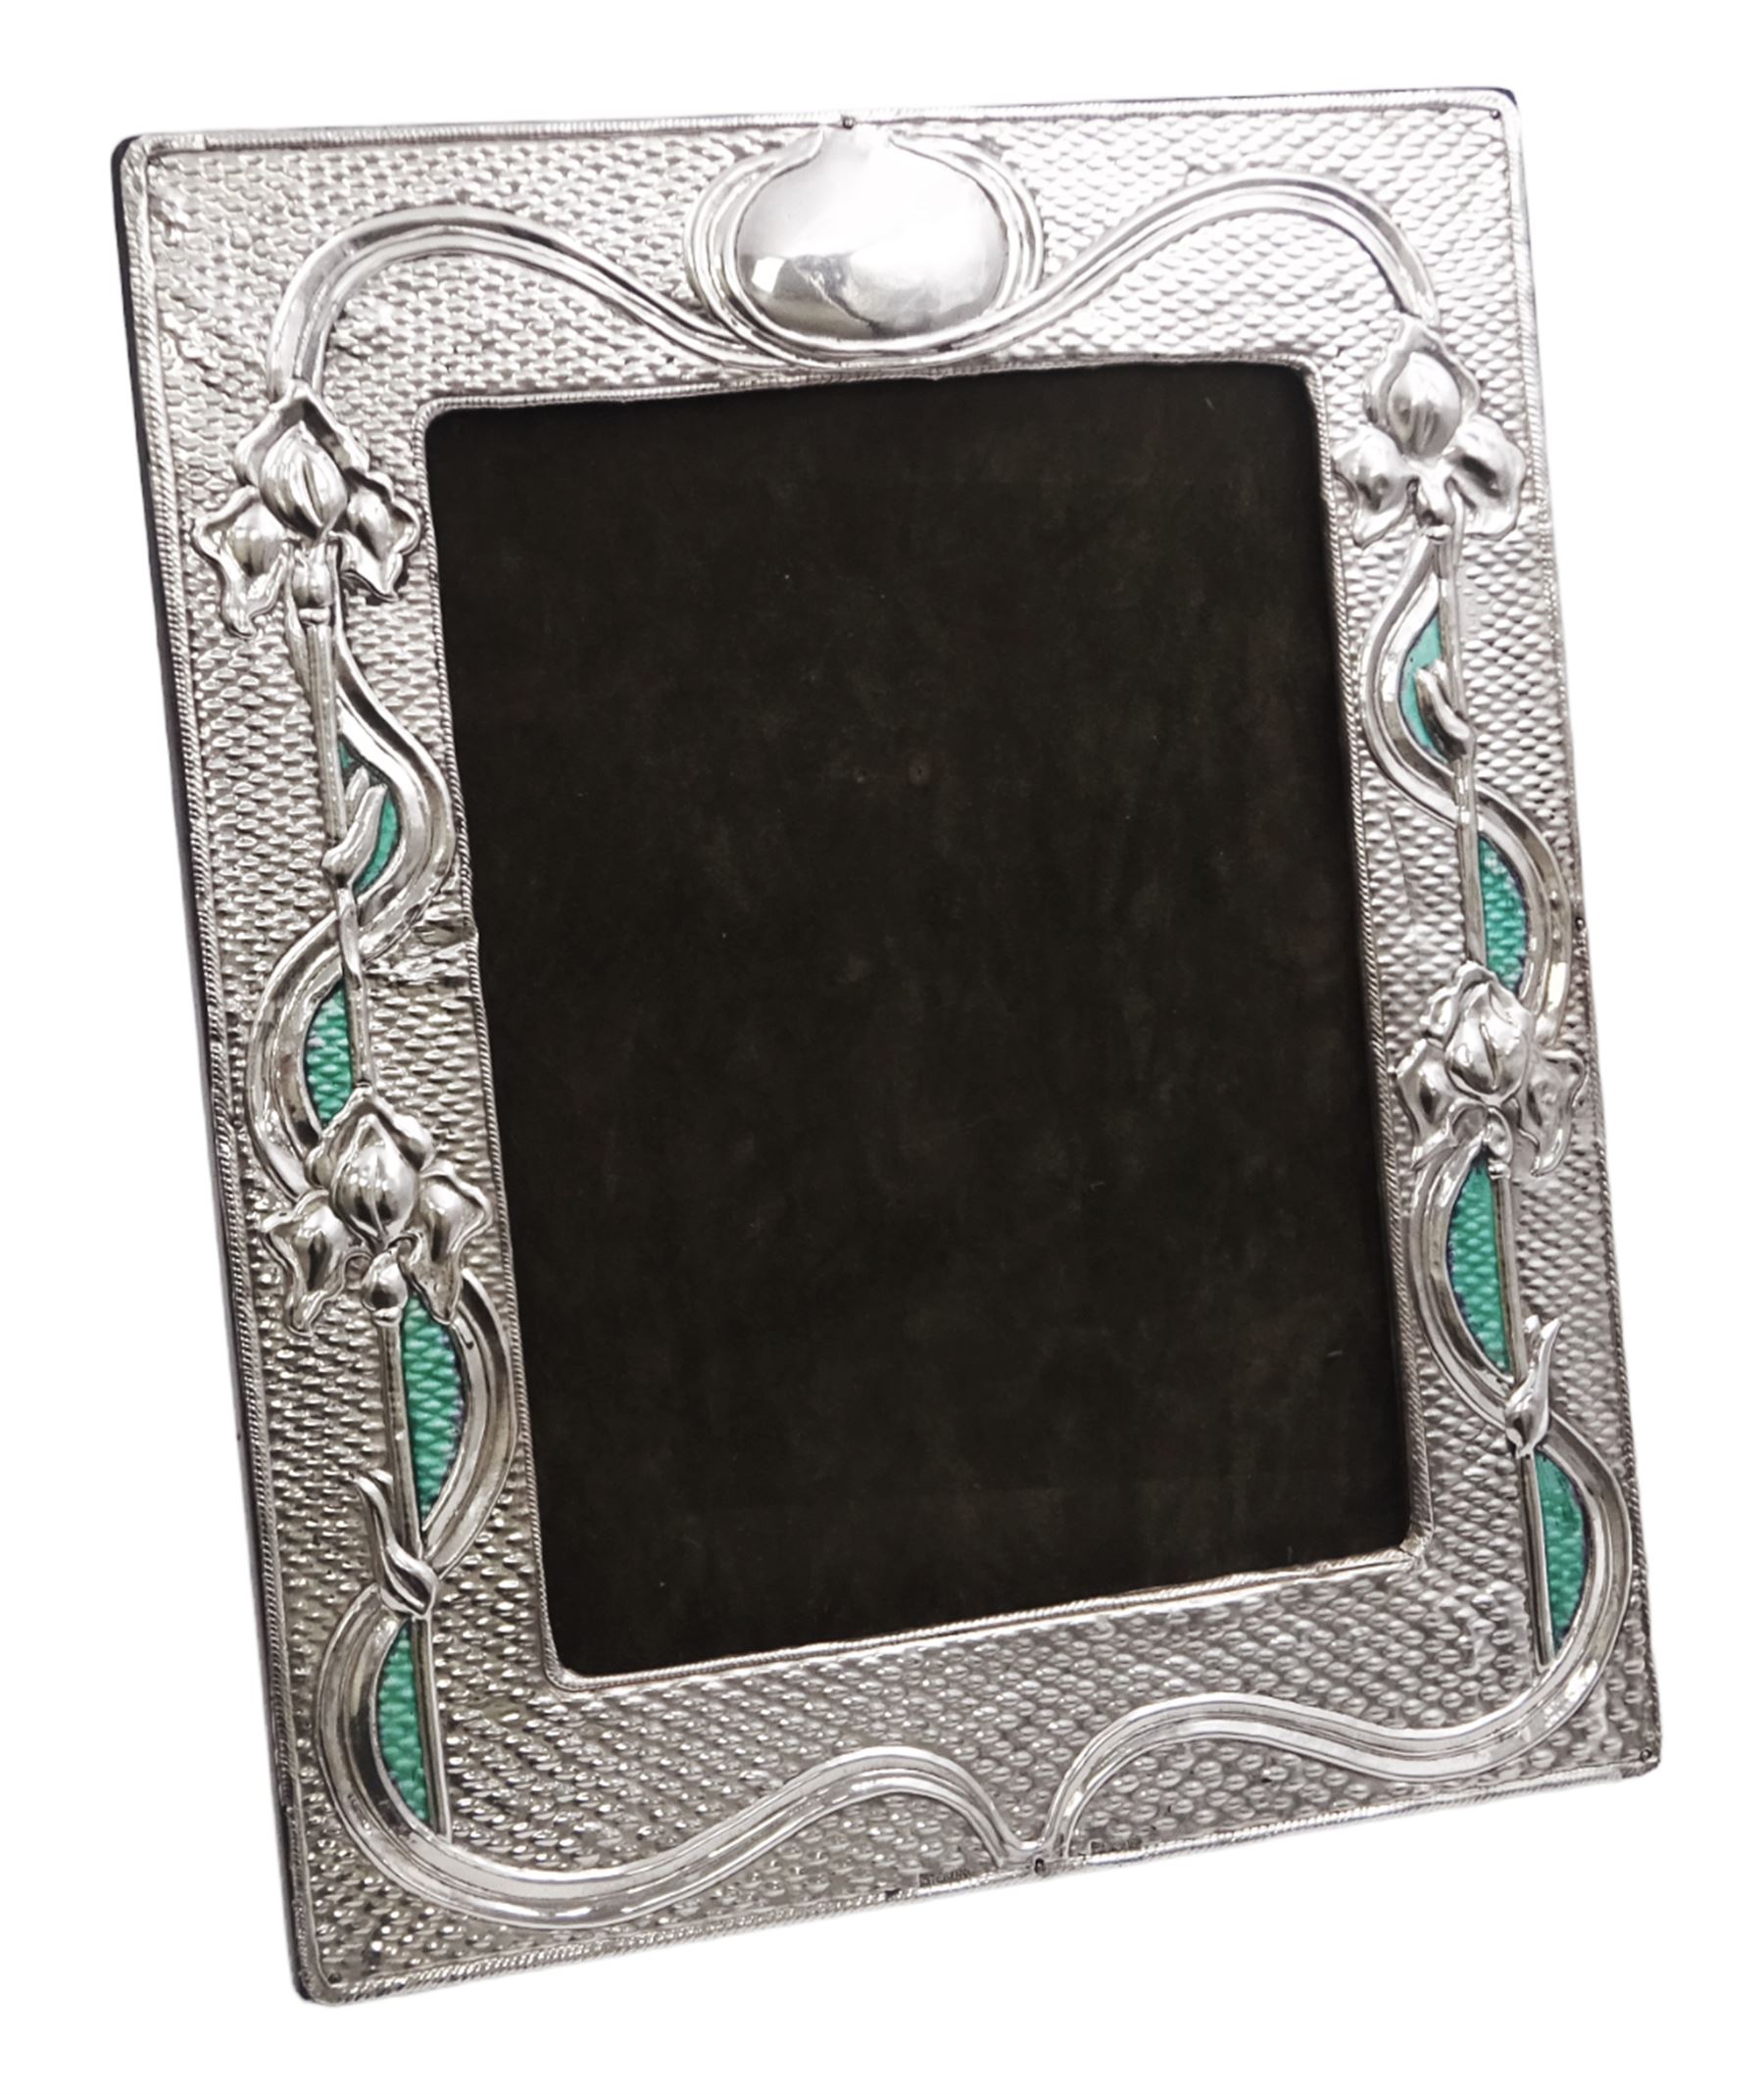 American Art Nouveau silver mounted photograph frame